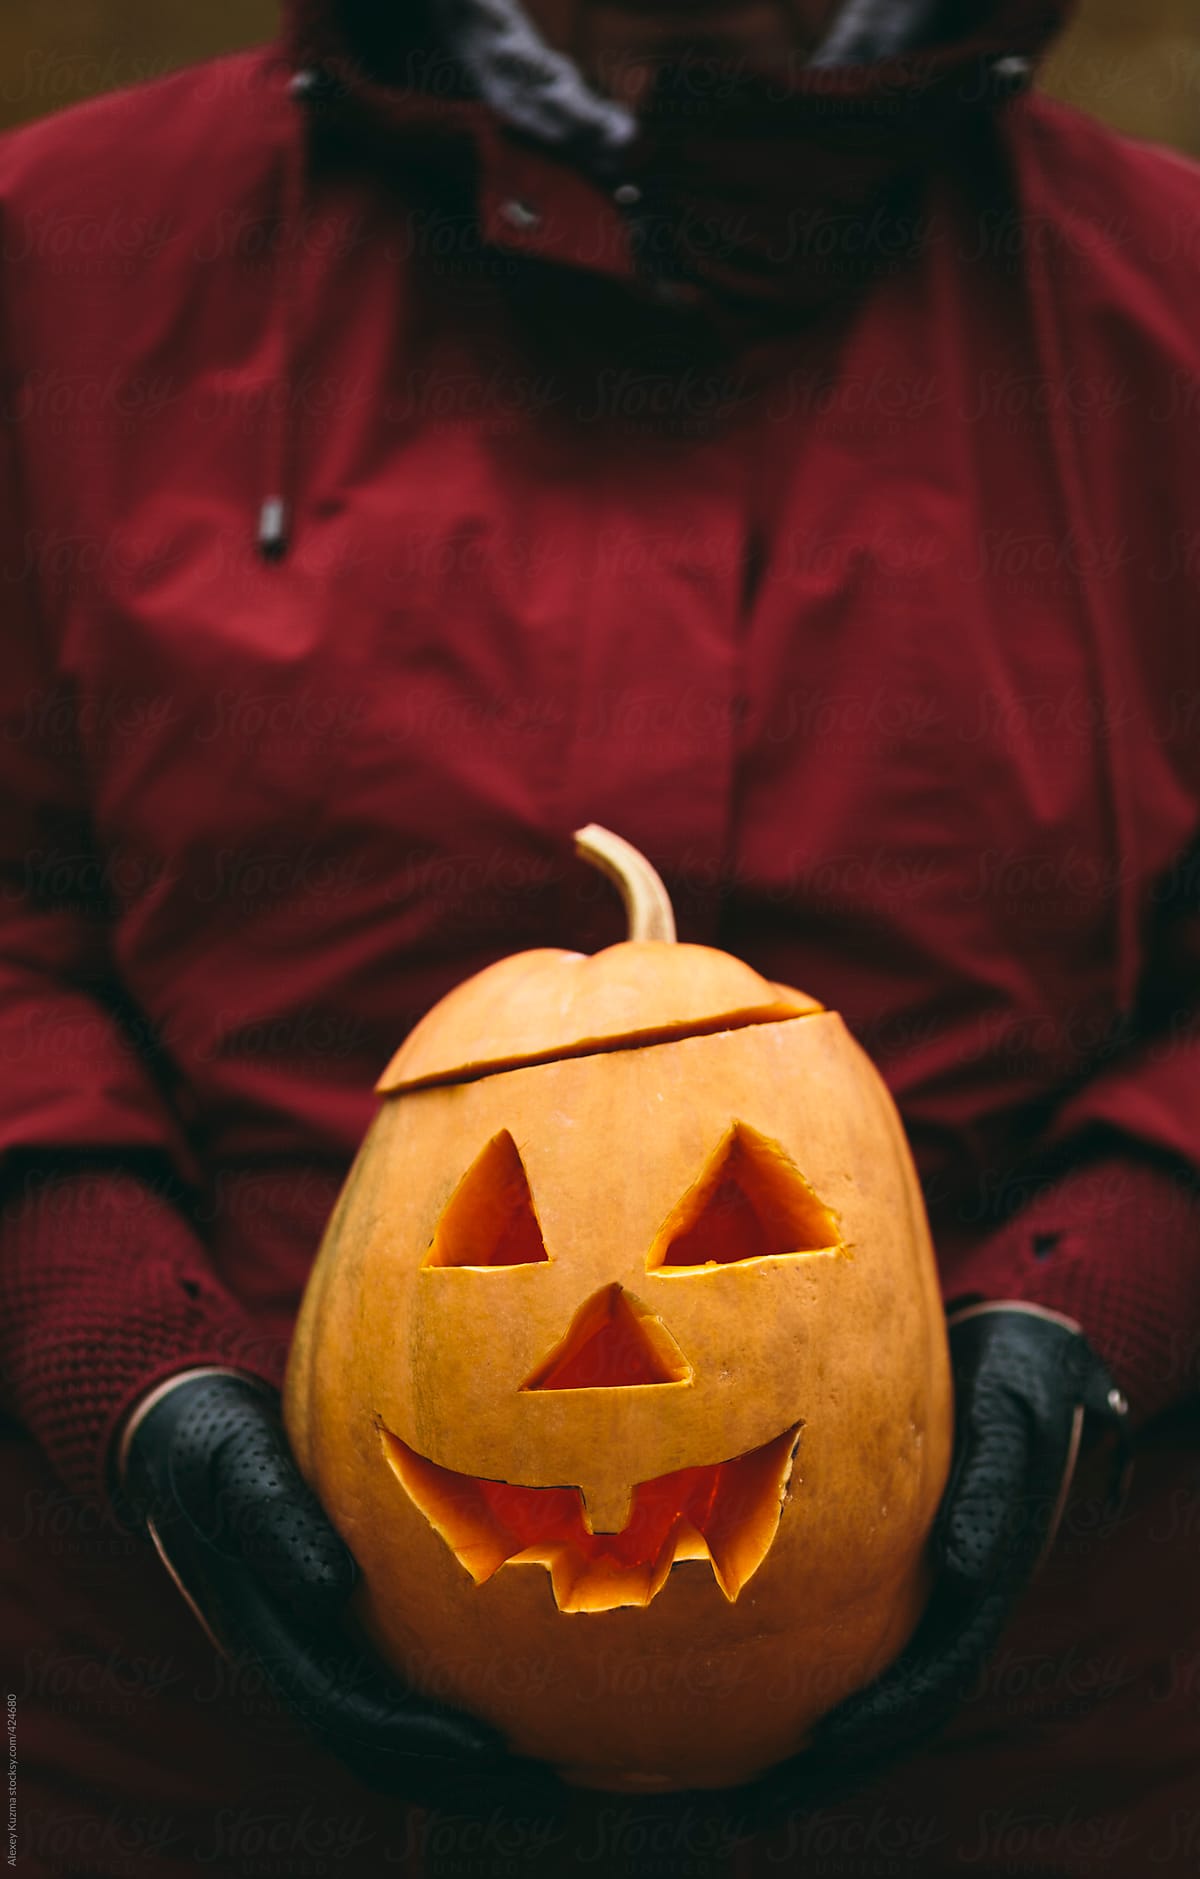 Woman holding Halloween Jack O' Lantern pumpkin